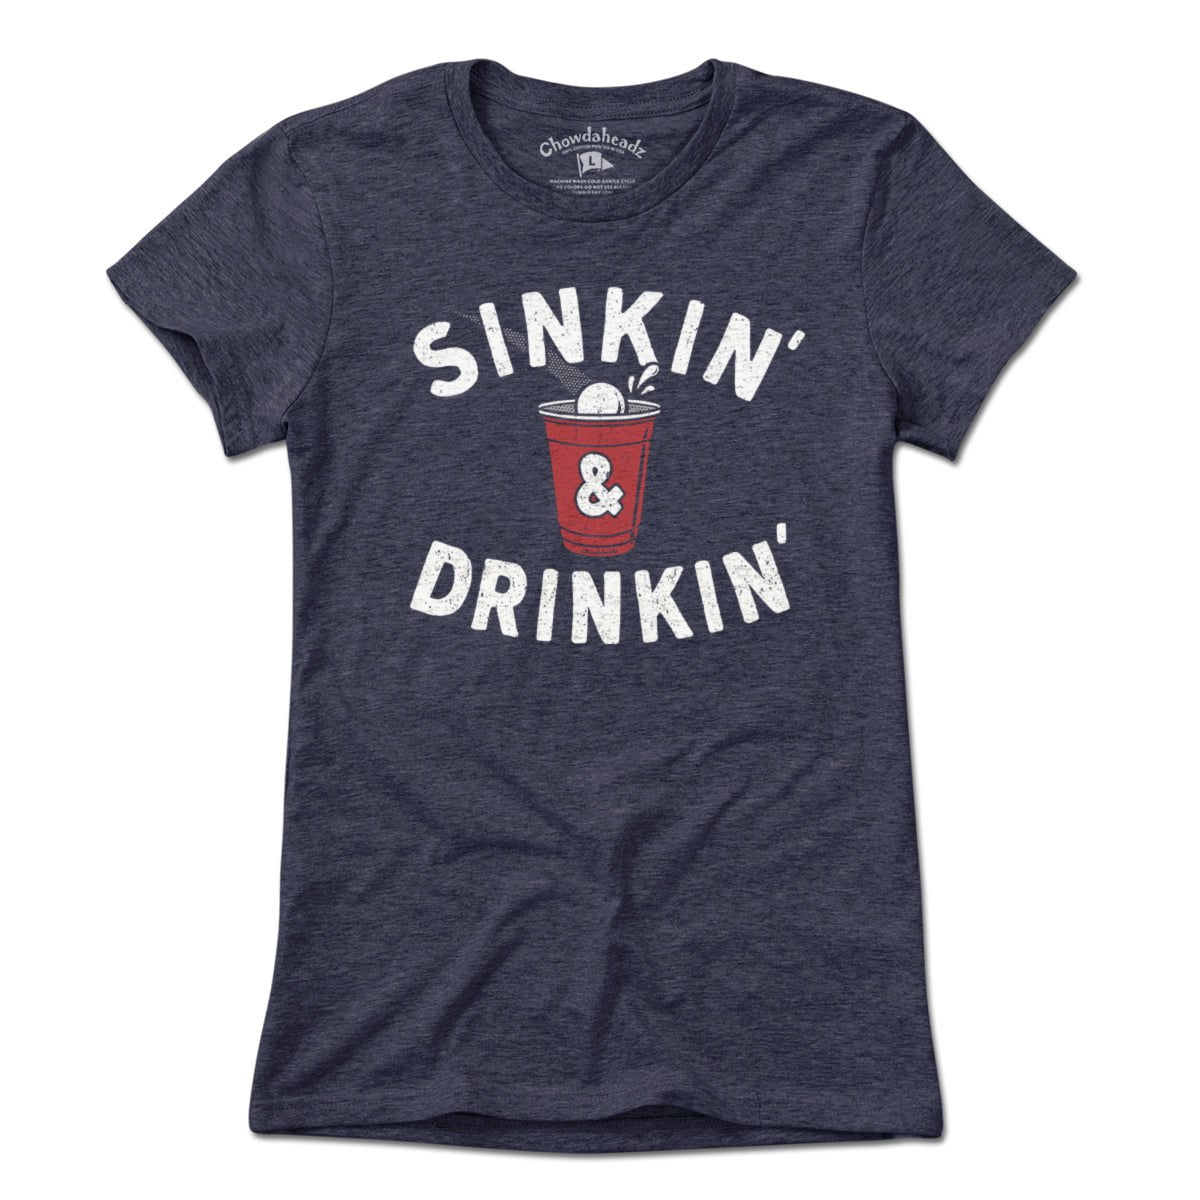 Sinkin' & Drinkin' Beer Pong T-Shirt - Chowdaheadz